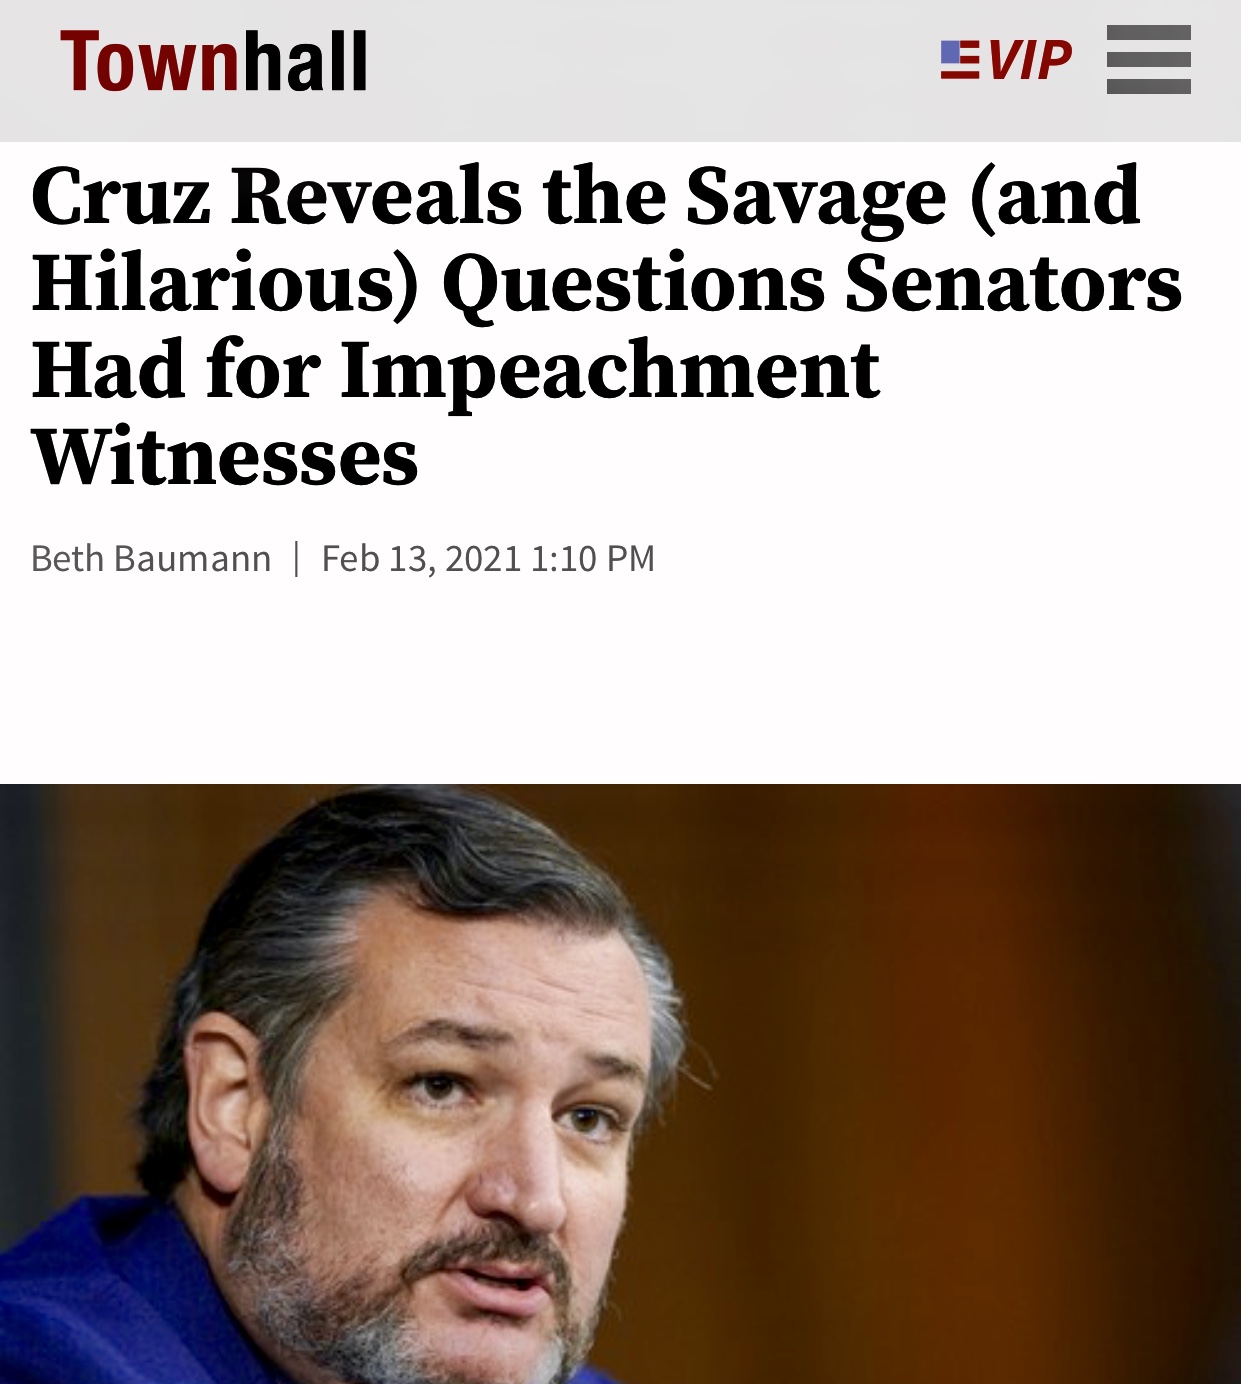 Senator Ted Cruz Reveals the Savage (and Hilarious) Questions Senators Had for Impeachment Witnesses